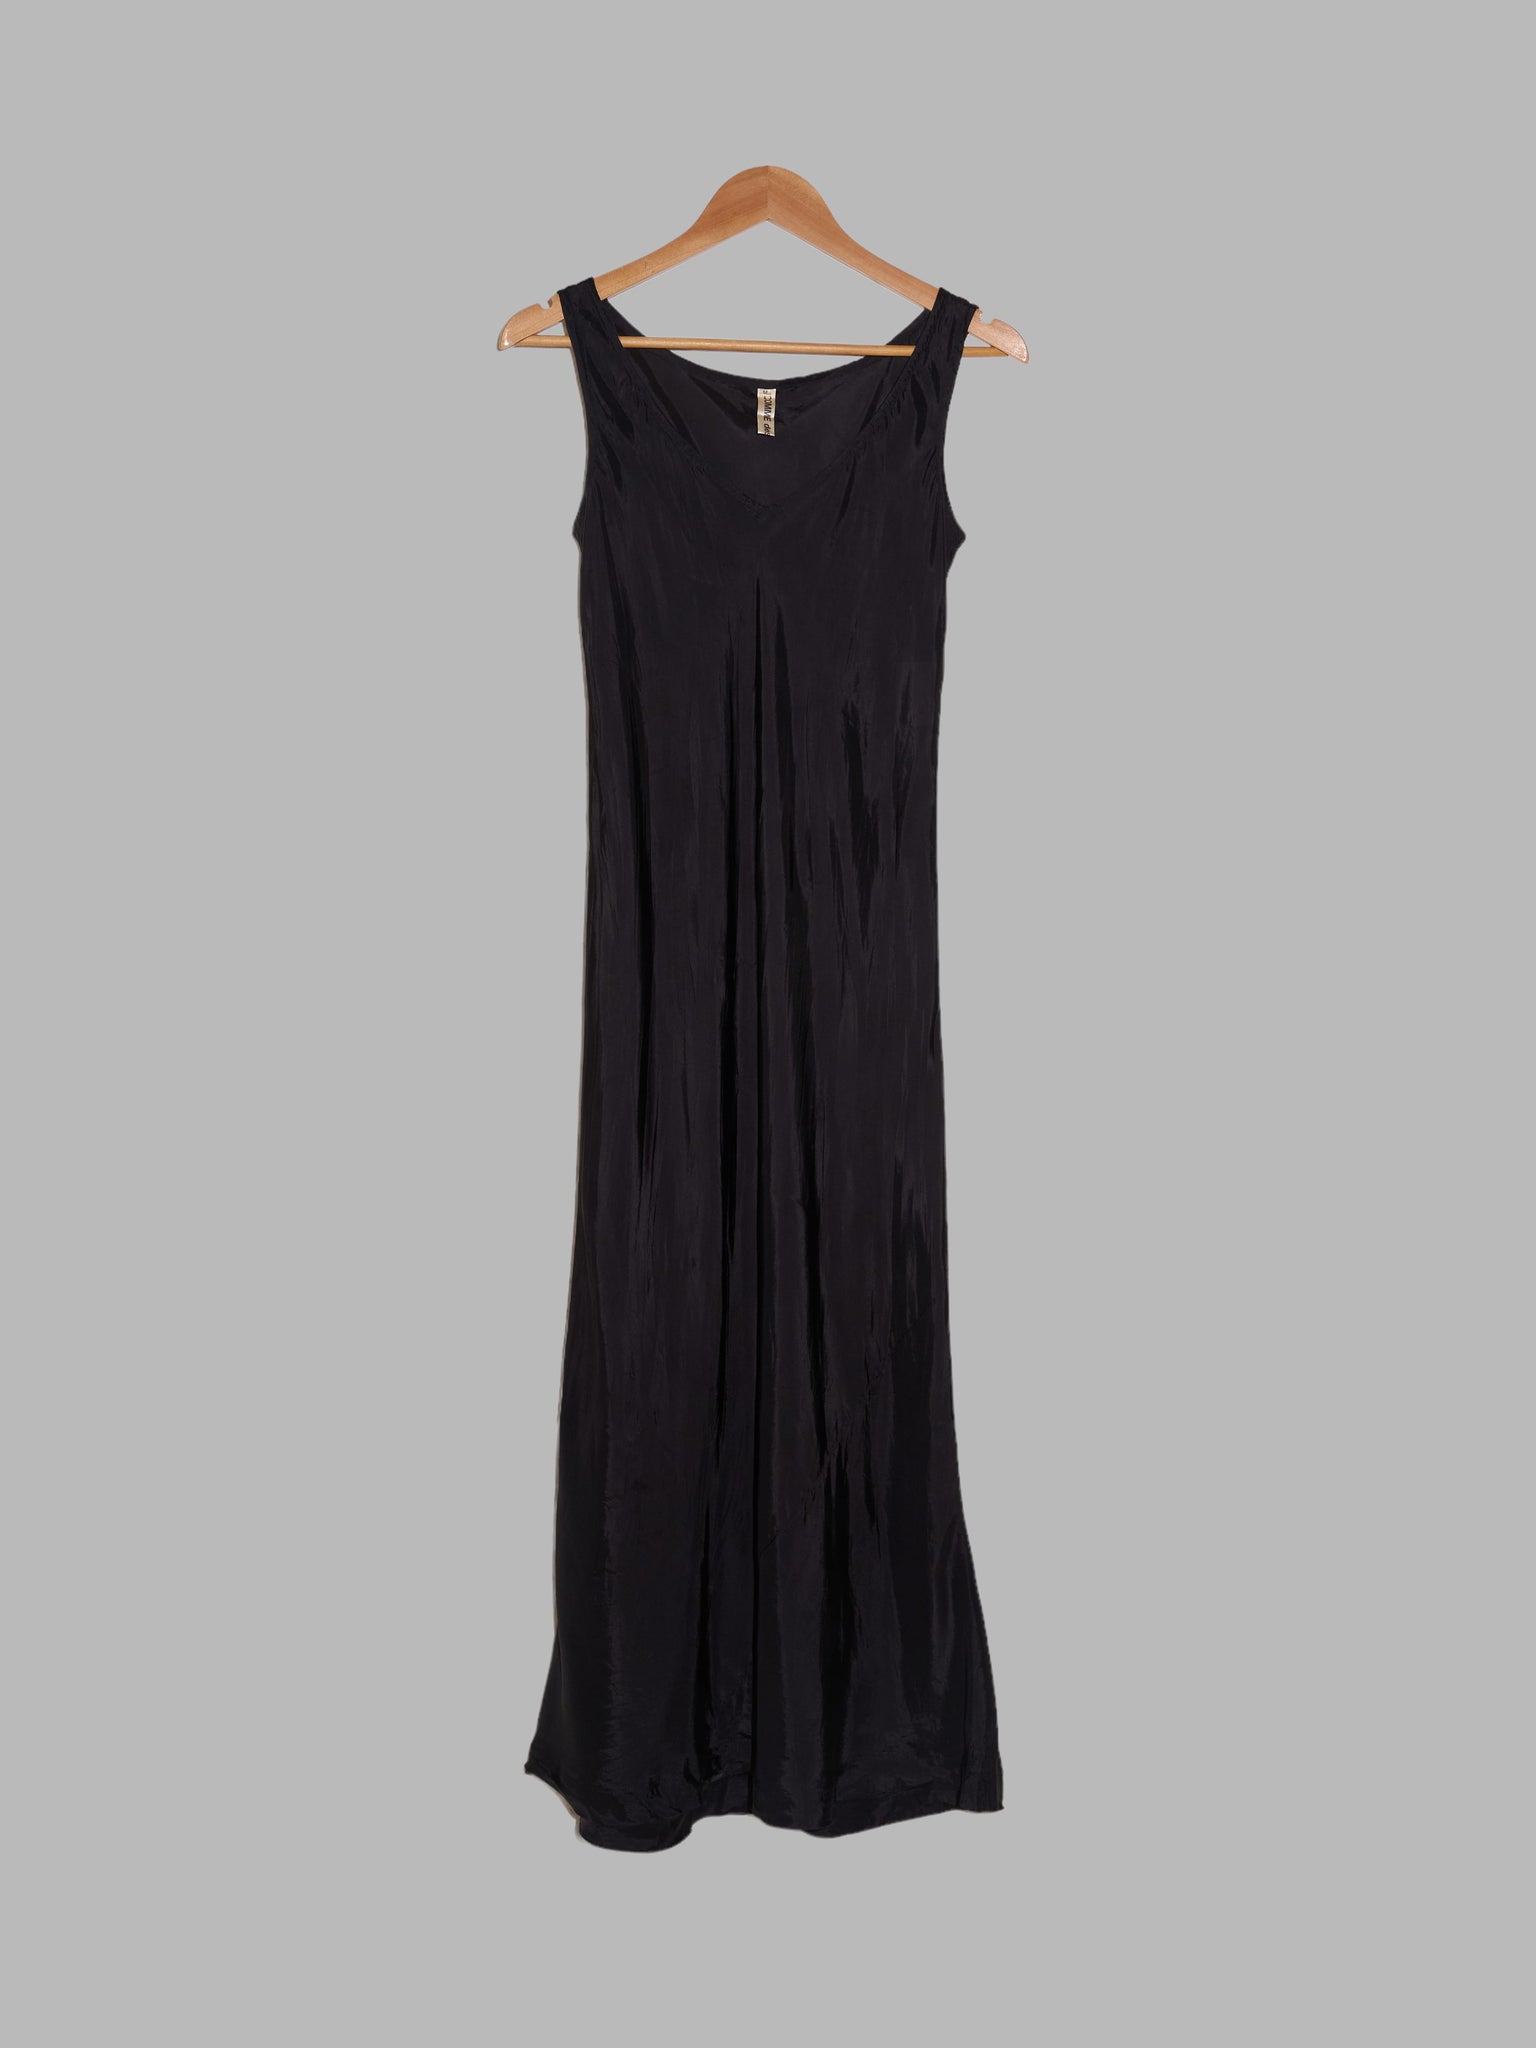 Comme des Garcons 1999 sheer black cupra sleeveless dress